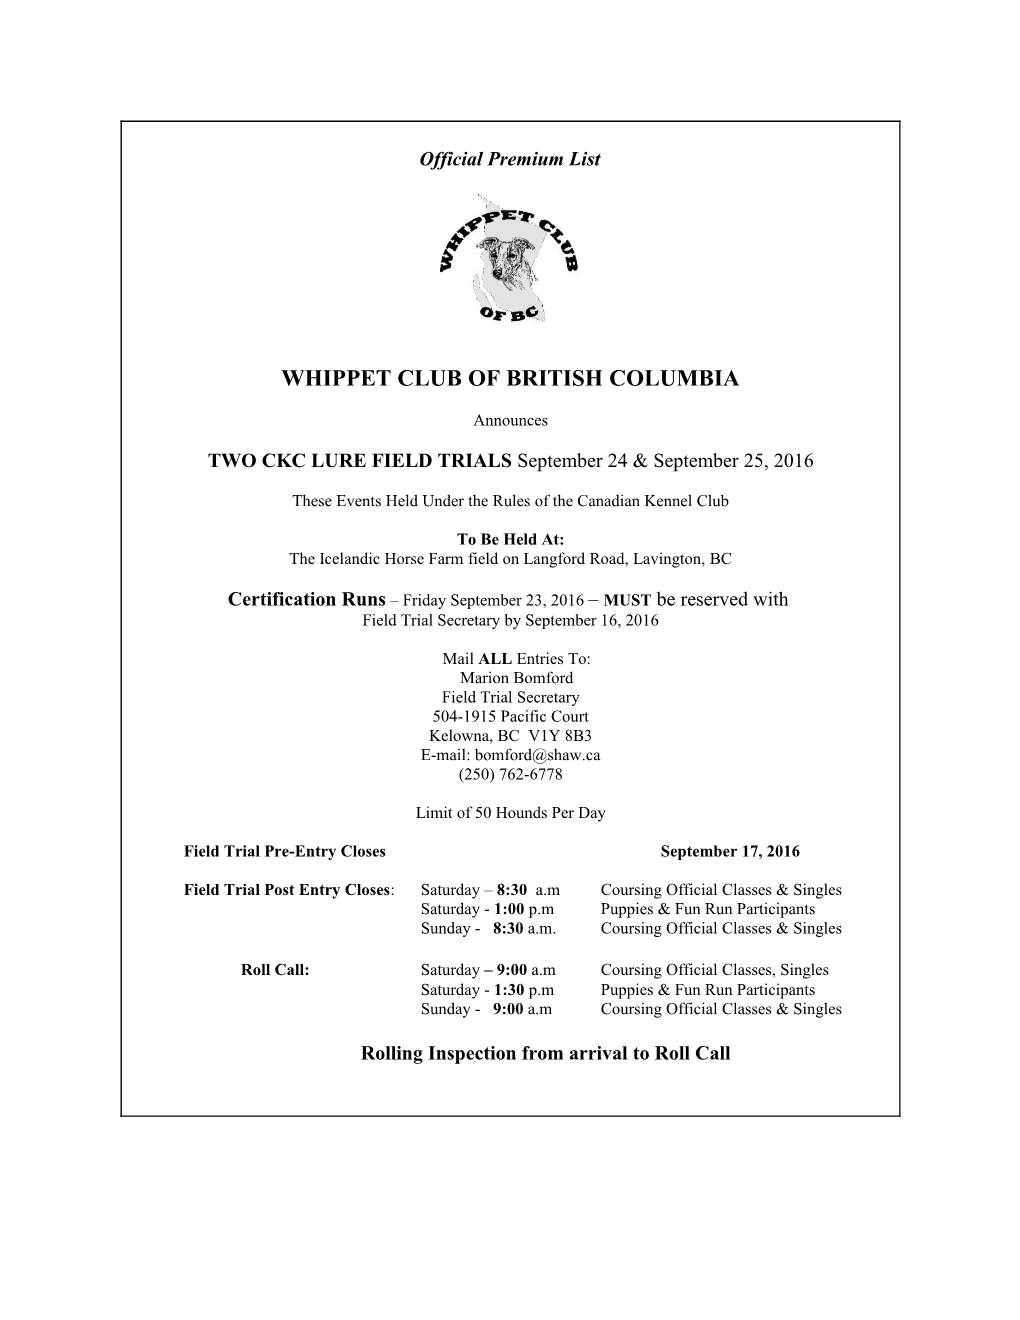 Whippet Club of British Columbia